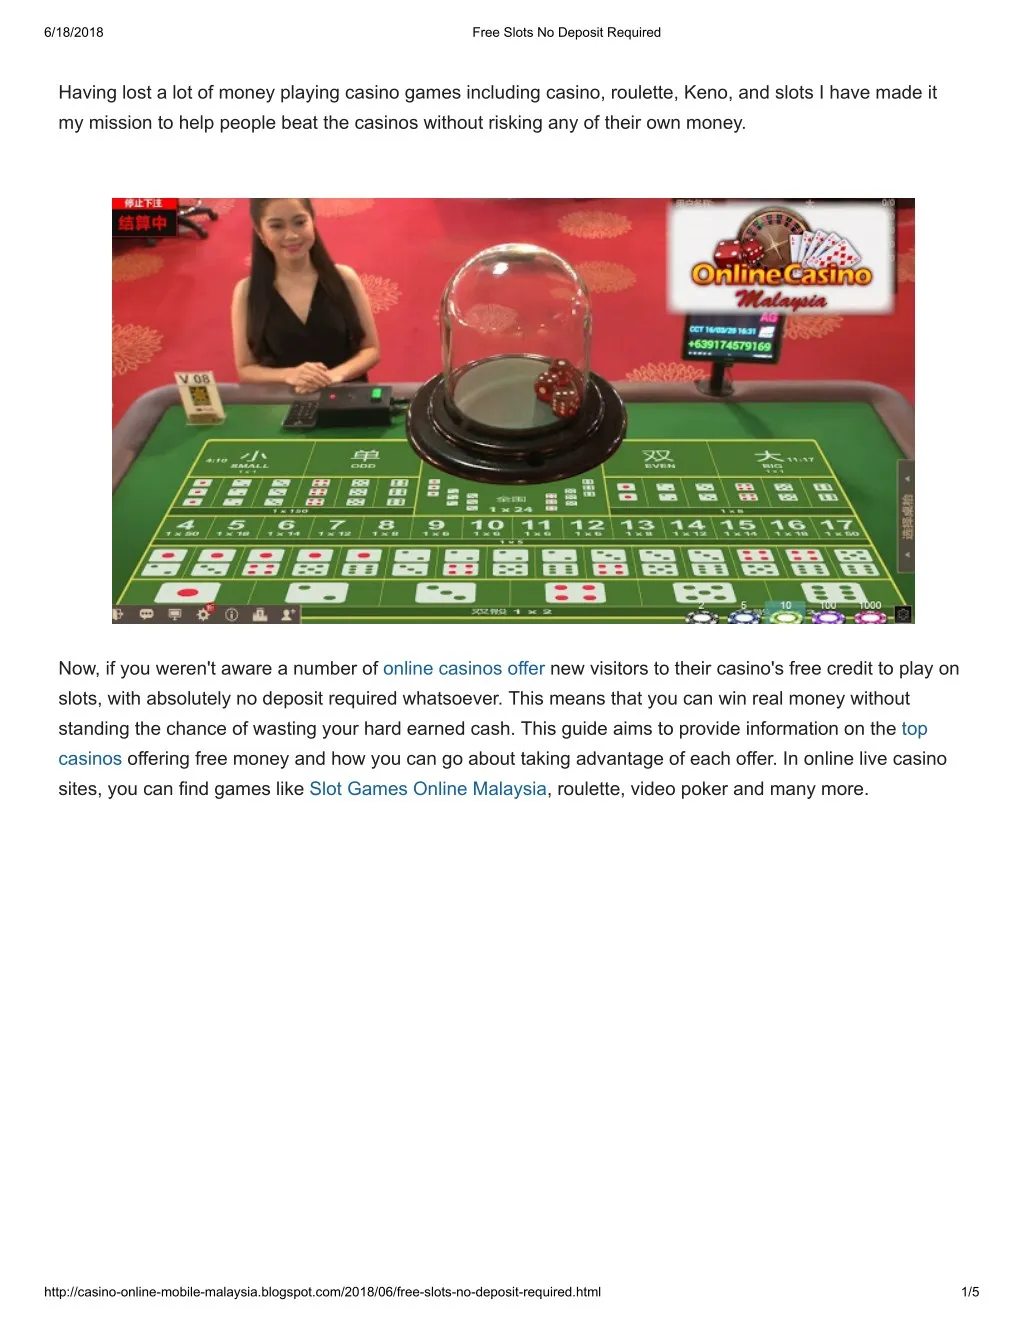 Free Online Slots - Free Computer Casino Games Casino